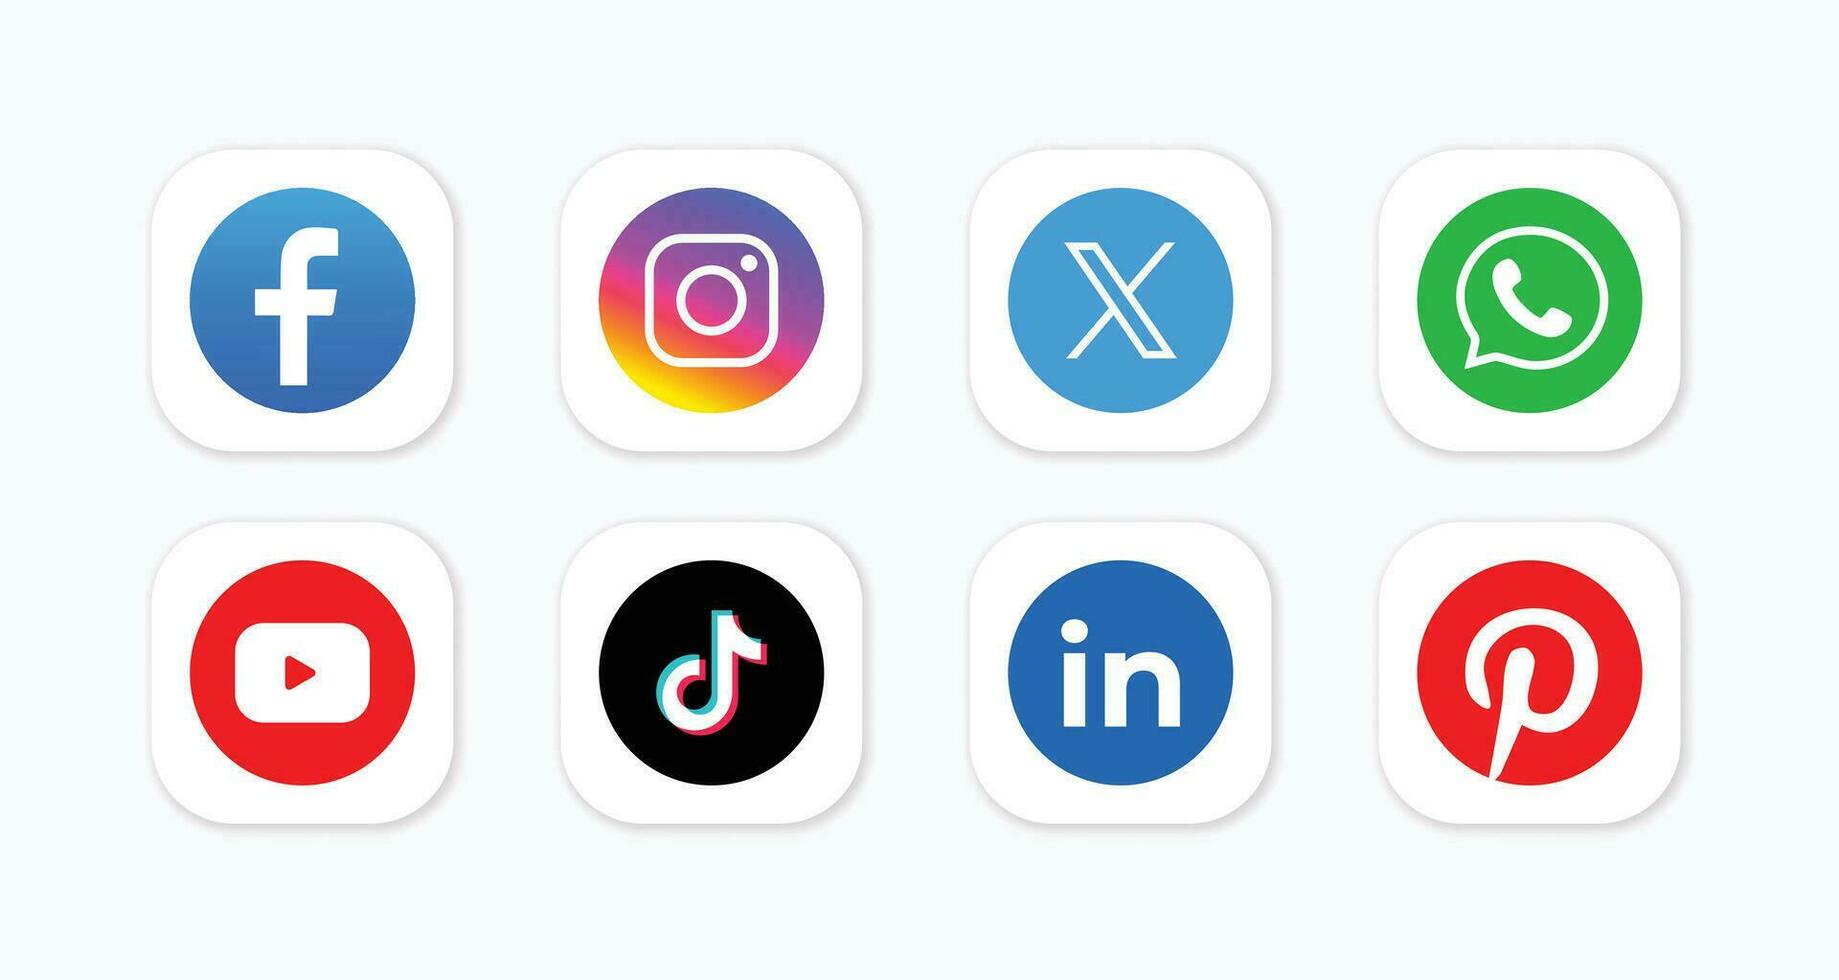 Set of social media logo in white background. Social media icon set collection. vector